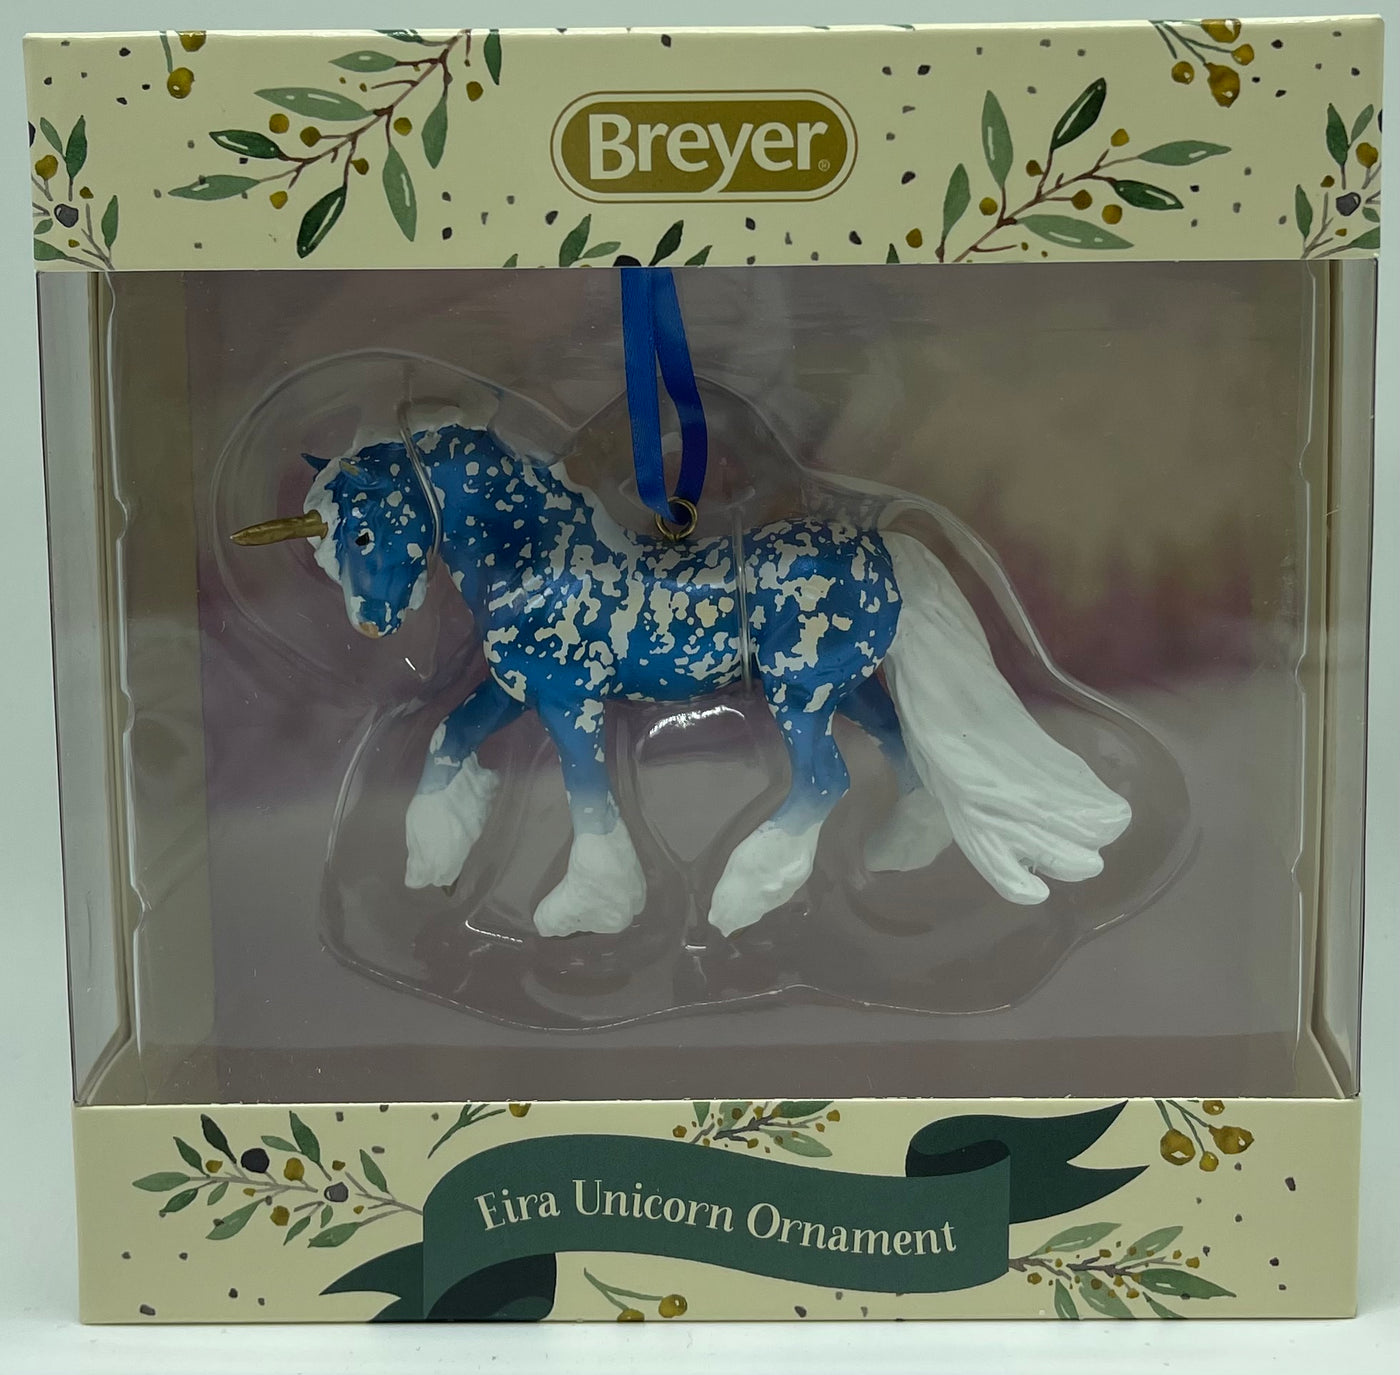 Breyer Horses 2021 Holiday Eira Unicorn Christmas Ornament New with Box